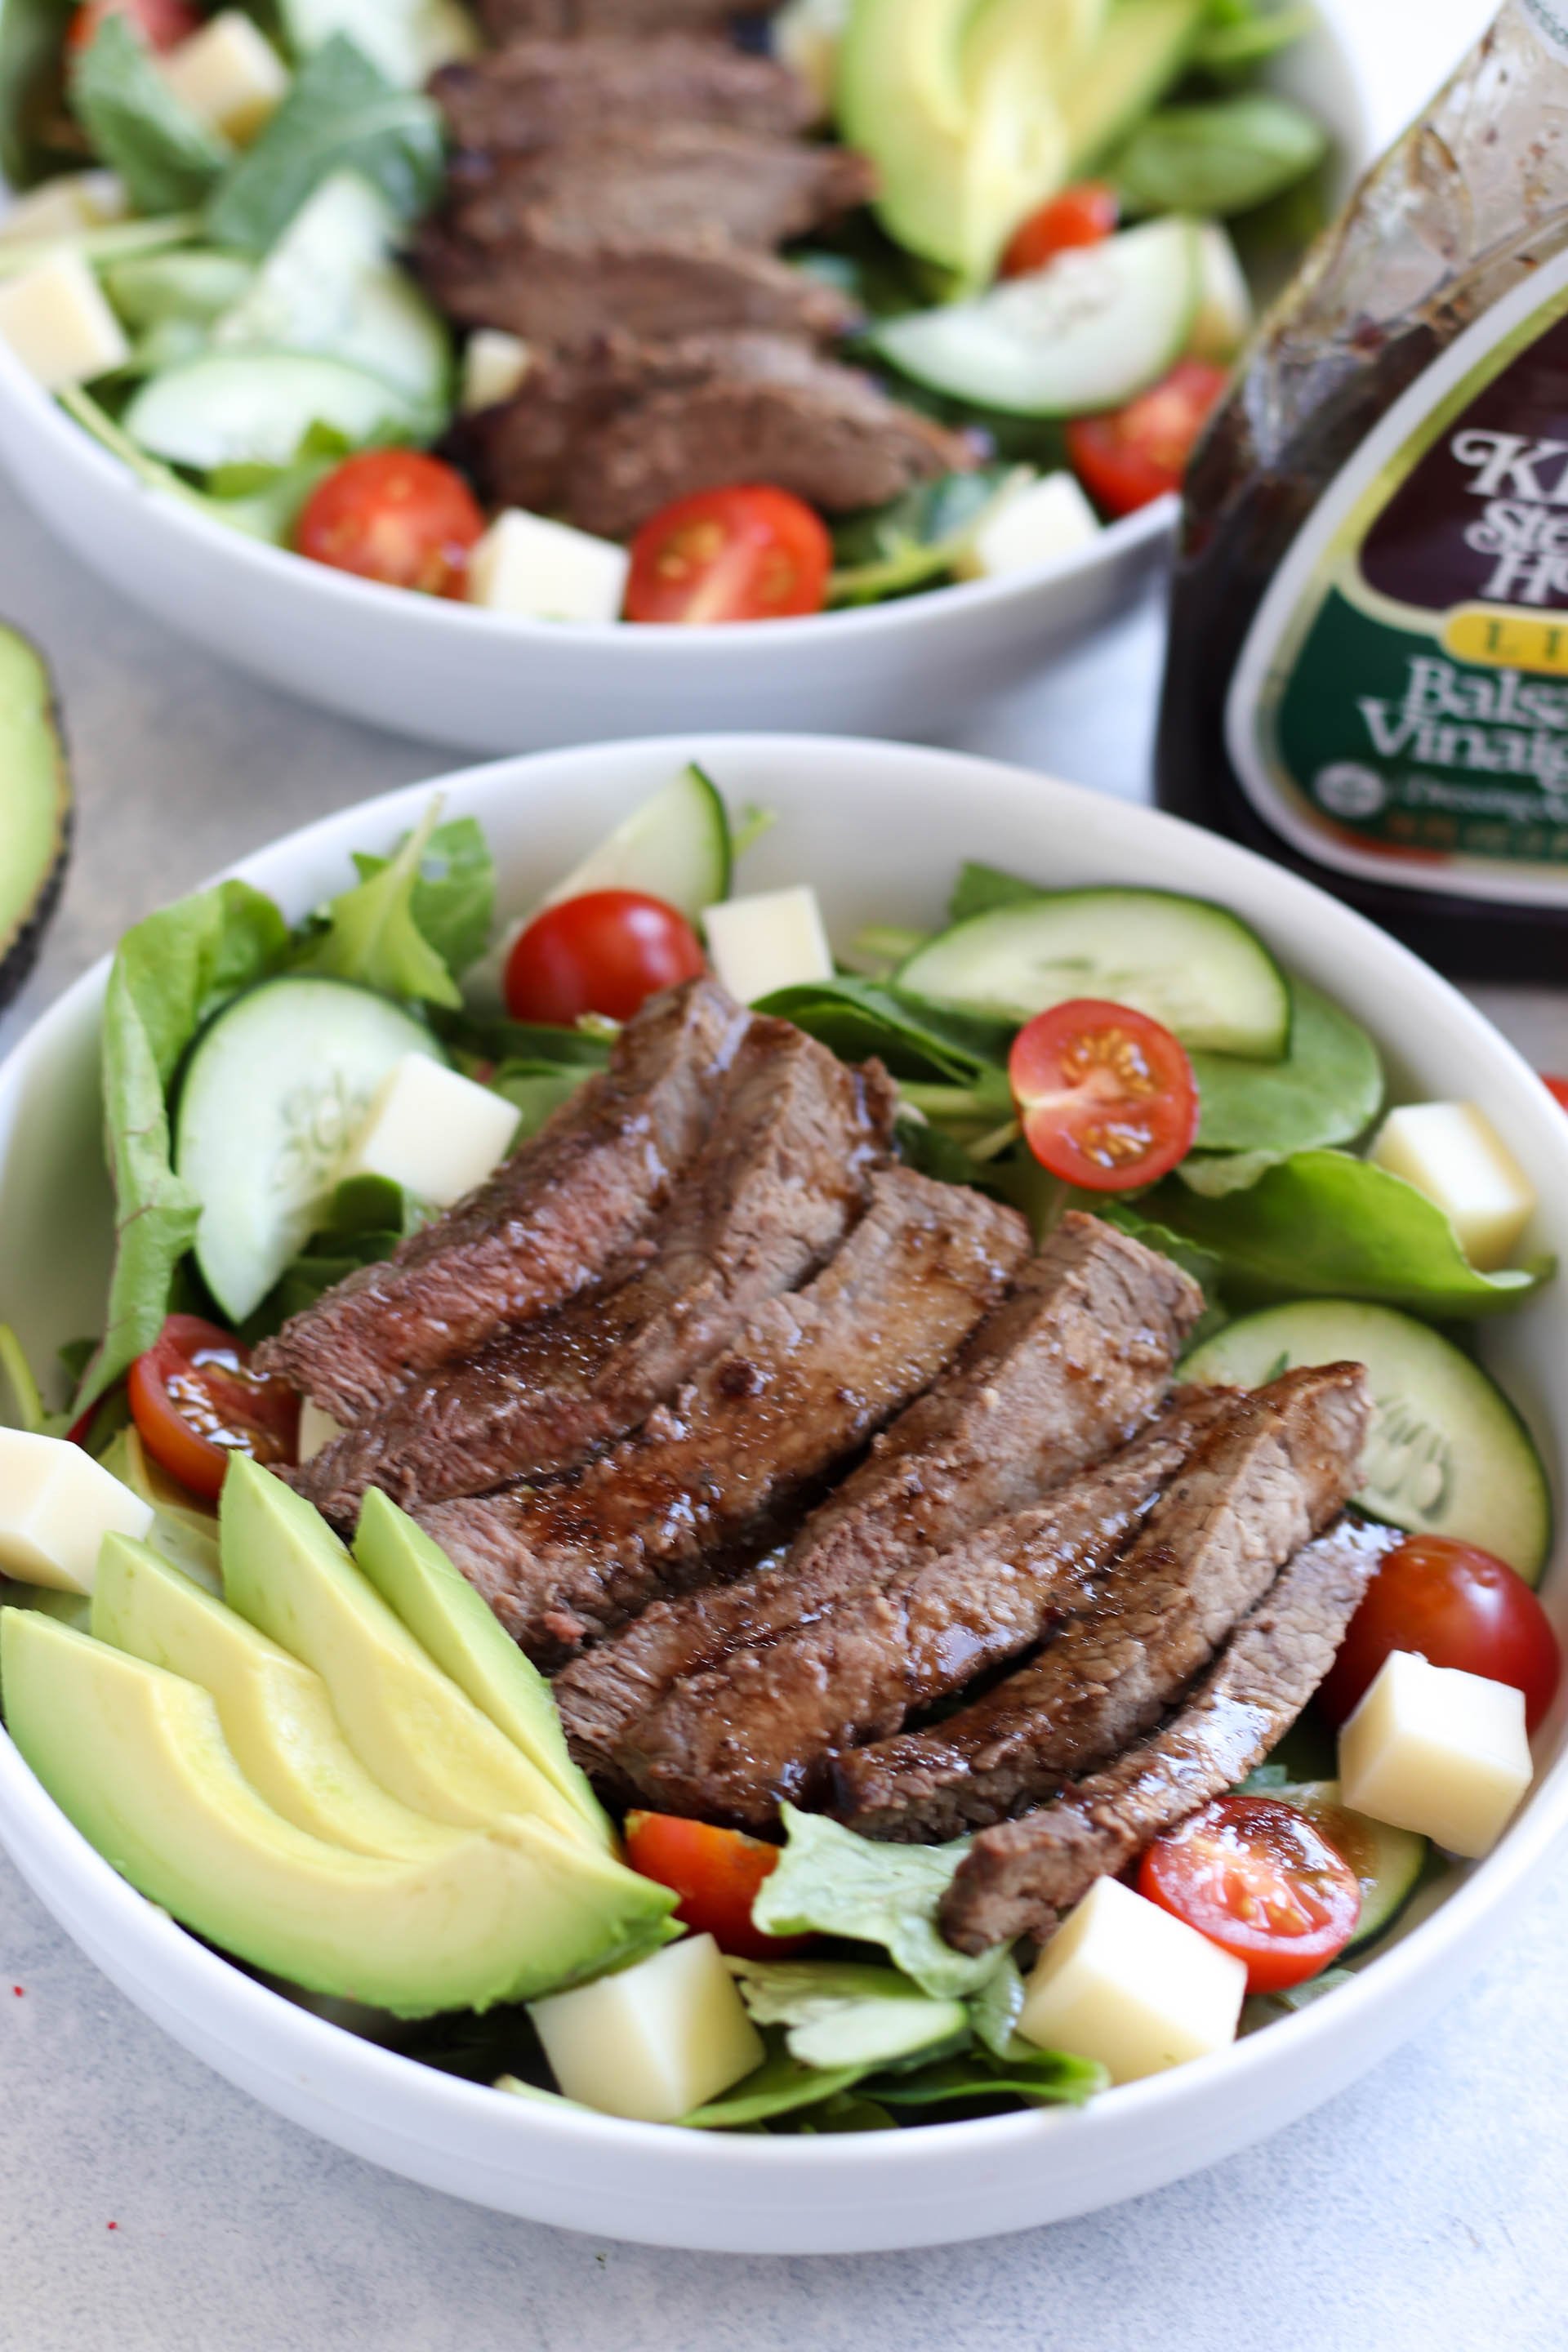 Balsamic Steak Salad